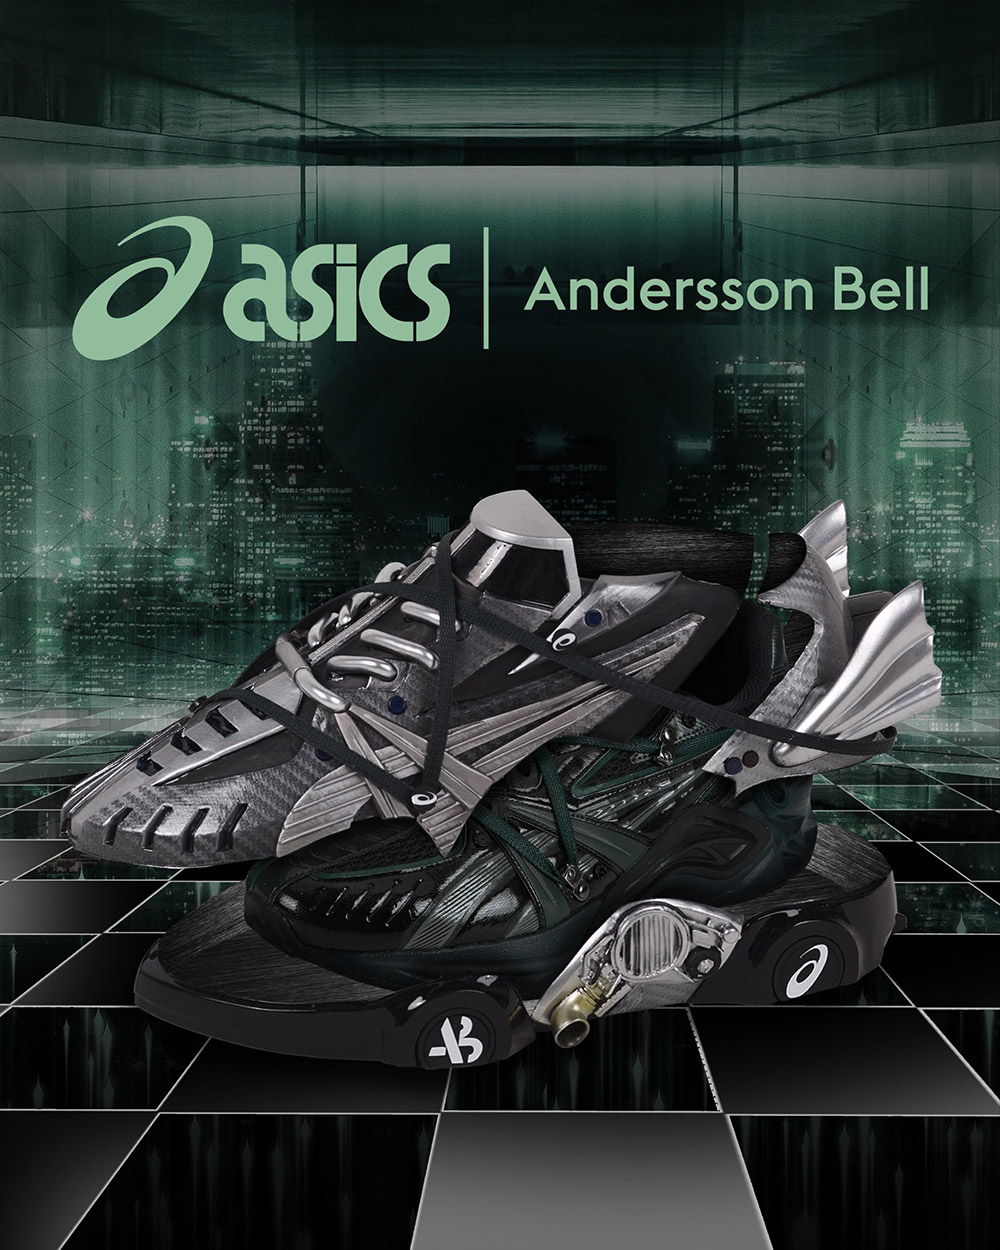 ASICS X Andersson Bell PROTOBLAST cover 03 - KENLU.net